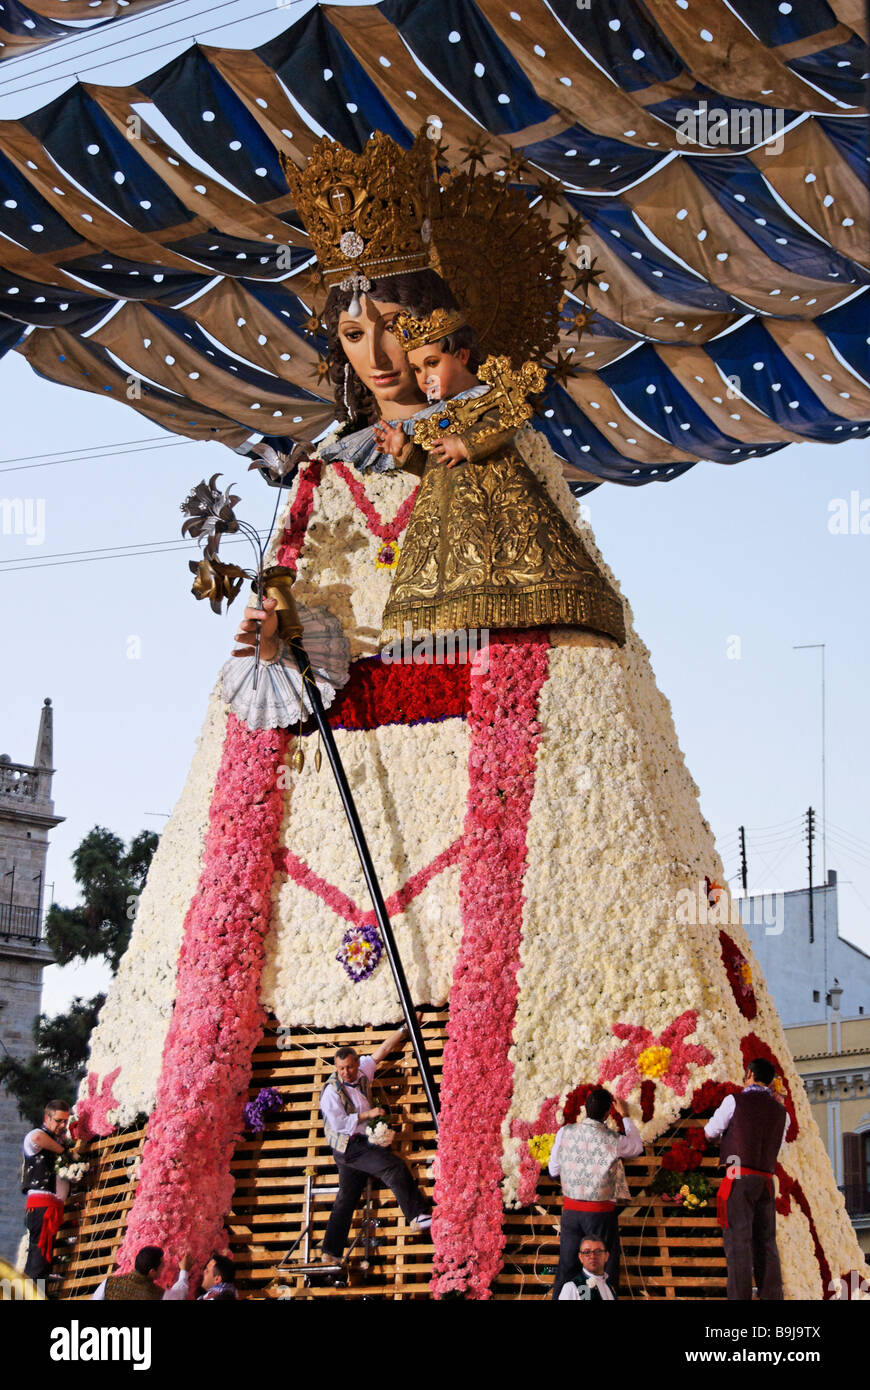 Männer, die große hölzerne Replik Statue der Virgen de Los Desamparados Blume Angebote Inverkehrbringen. Las Fallas Festival Valencia, Spanien Stockfoto